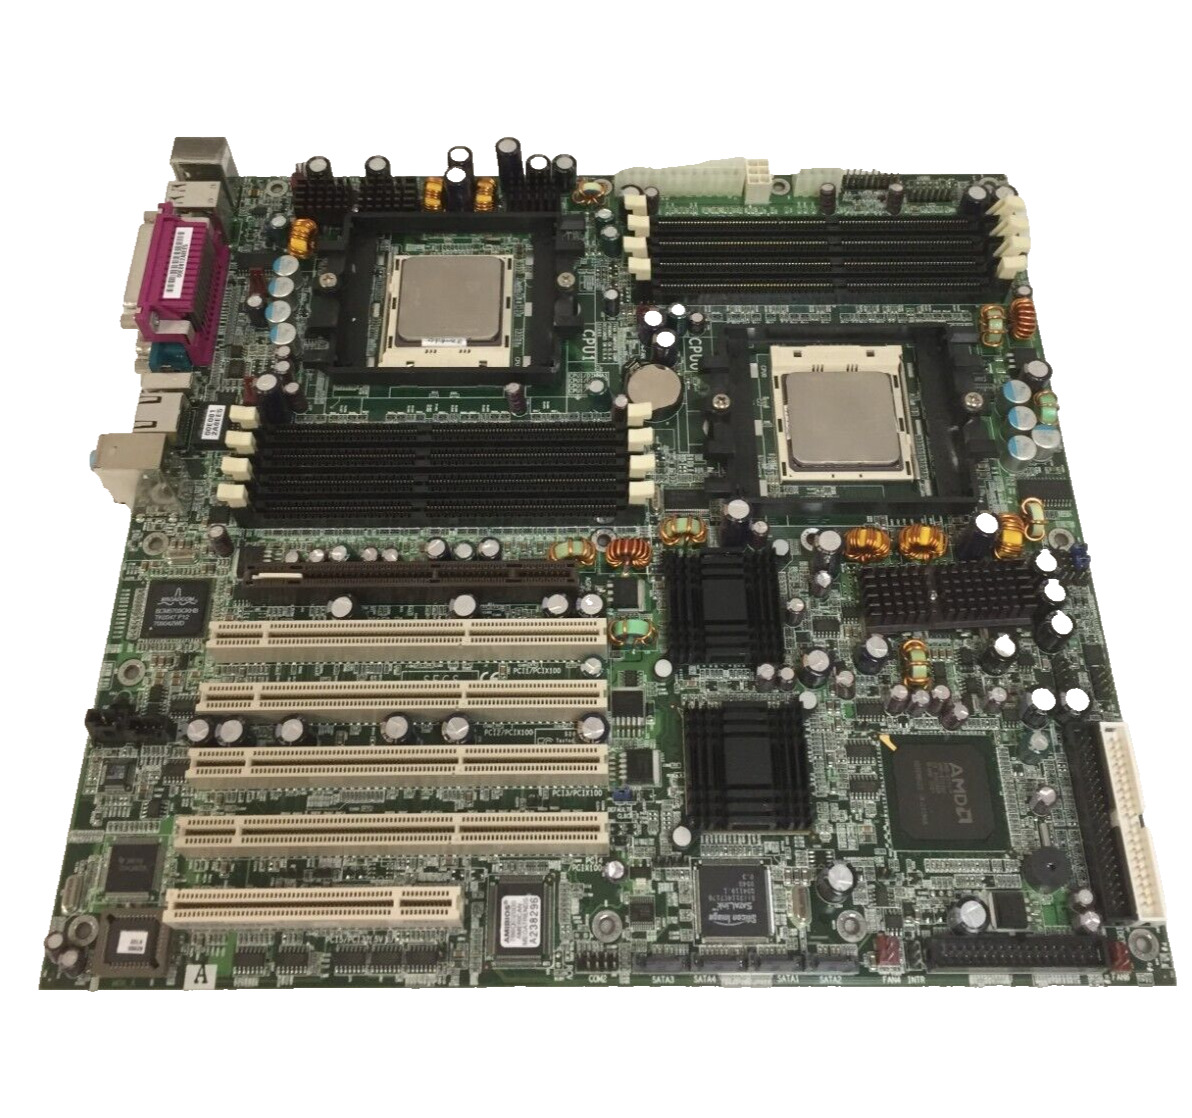 Tyan Thunder K8W S2885 Server Motherboard Socket 940 w/ 2x AMD CPU Opteron 248